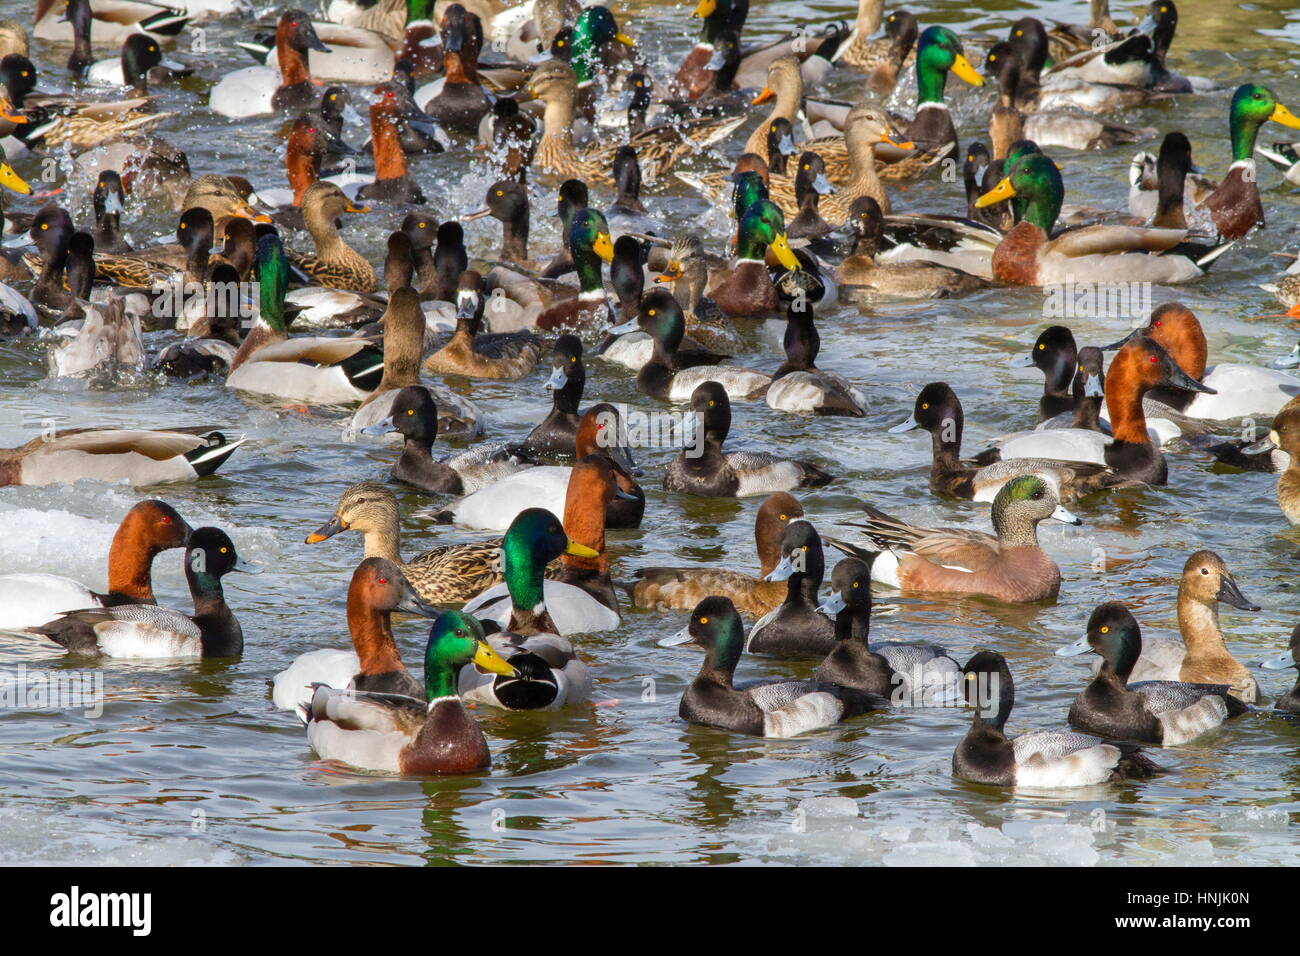 Waterfowl diversity: mallard ducks, Anas platyrhynchos, lesser scaup ducks, Aythya affinis, American wigeon ducks, Anas americana, canvasback ducks, Aythya valiseria. Stock Photo